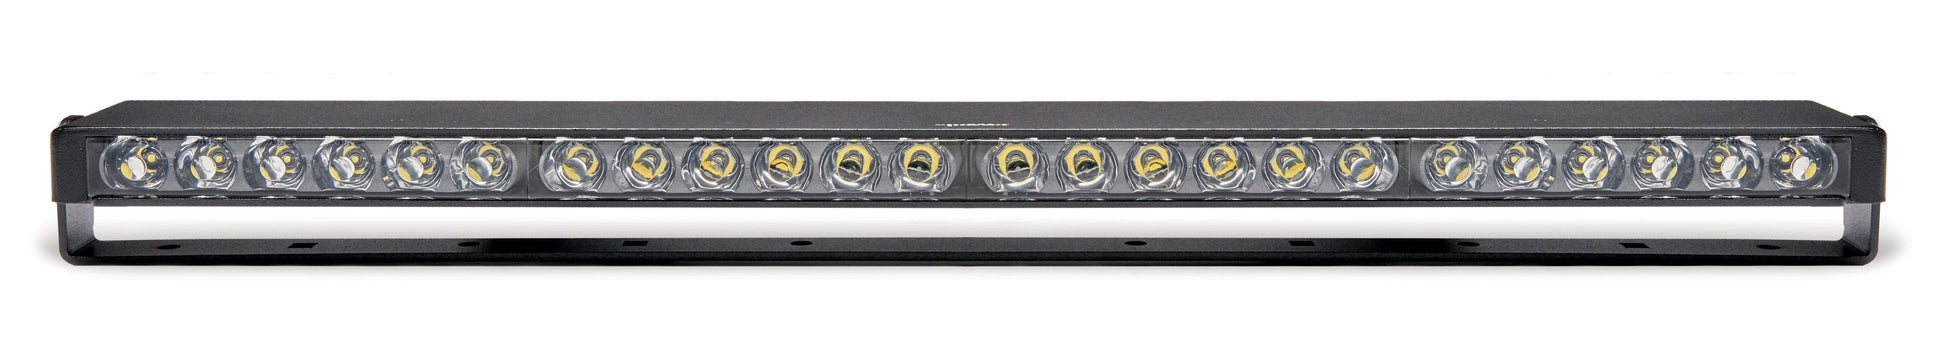 MPower ORV 24 Inch Lightbar Silicone Lens LED Light - Mid-Atlantic Off-Roading